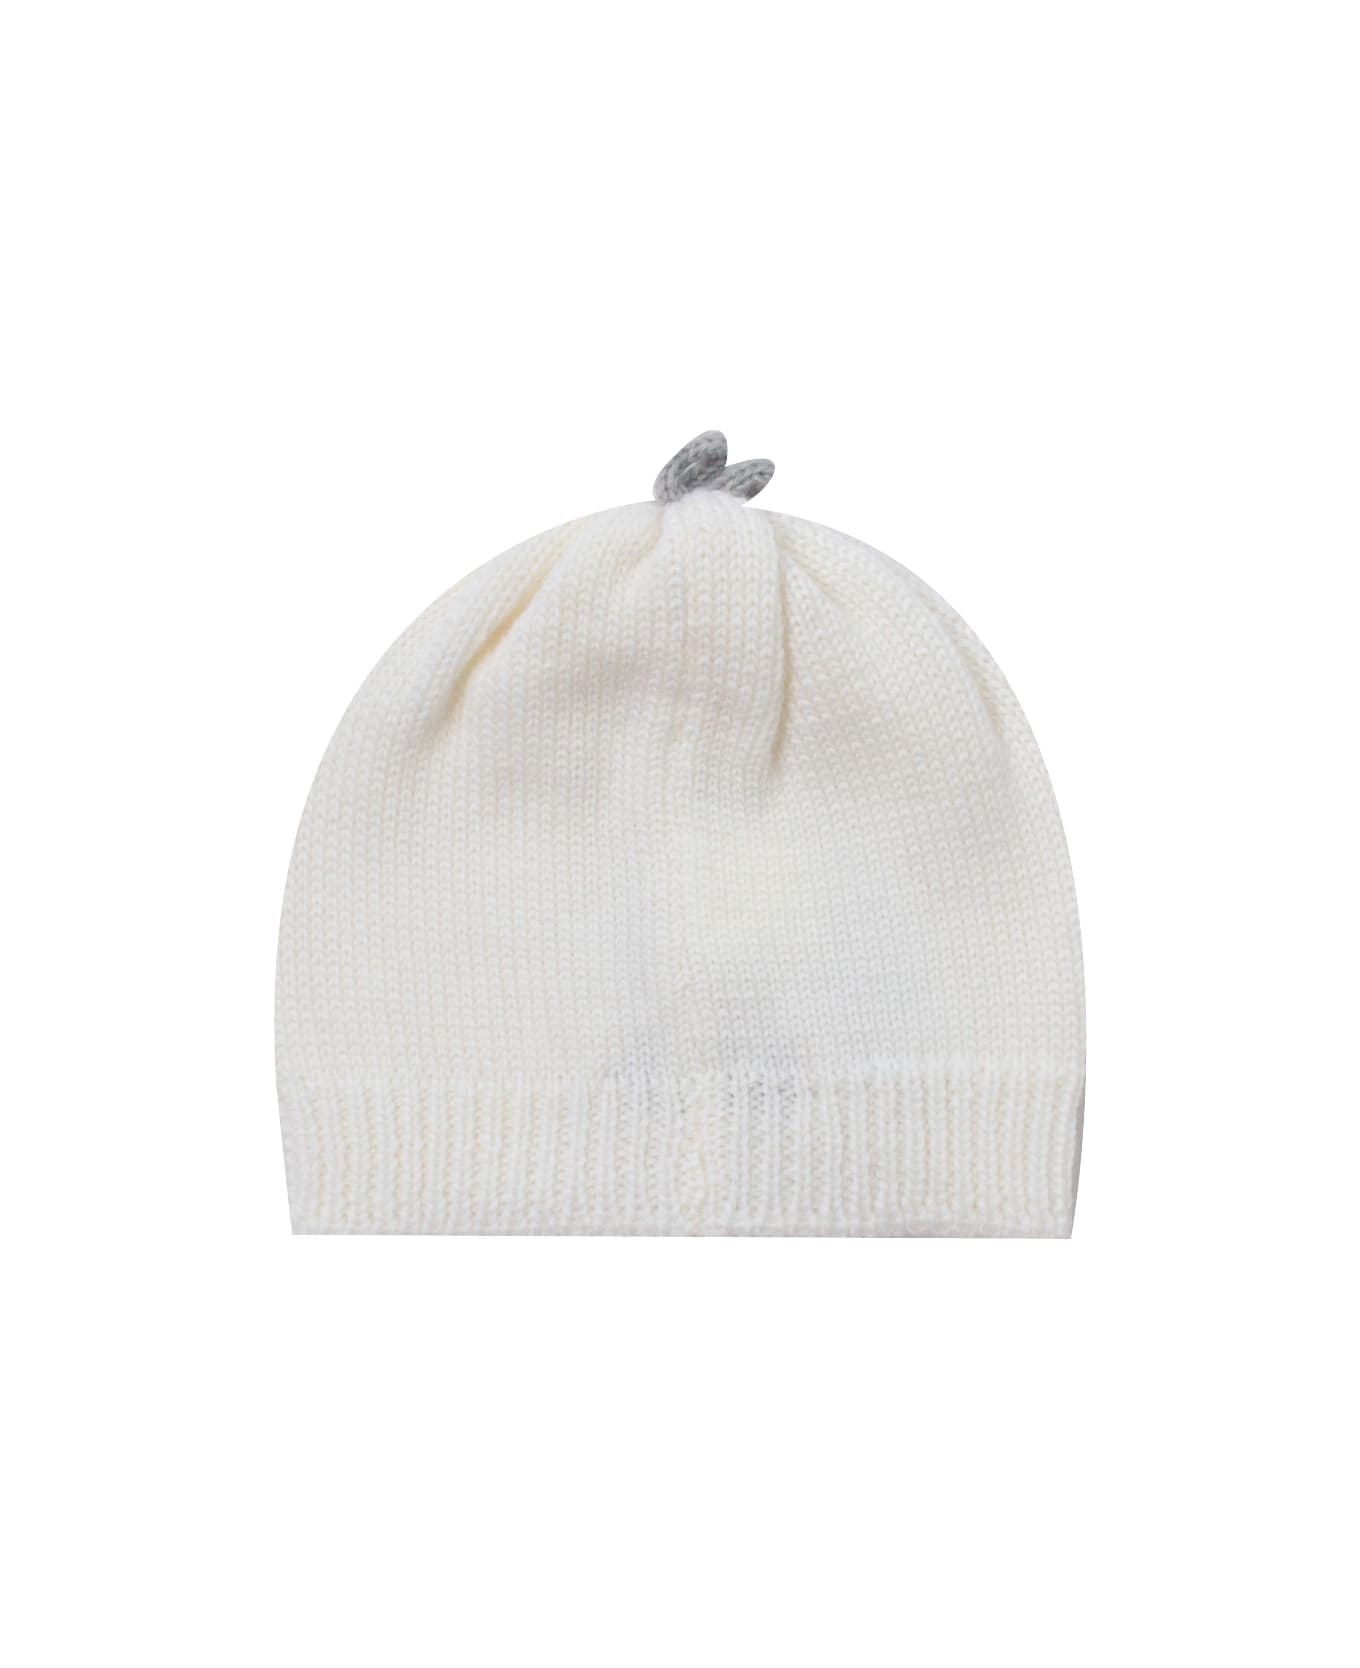 Piccola Giuggiola Wool Knit Hat - White